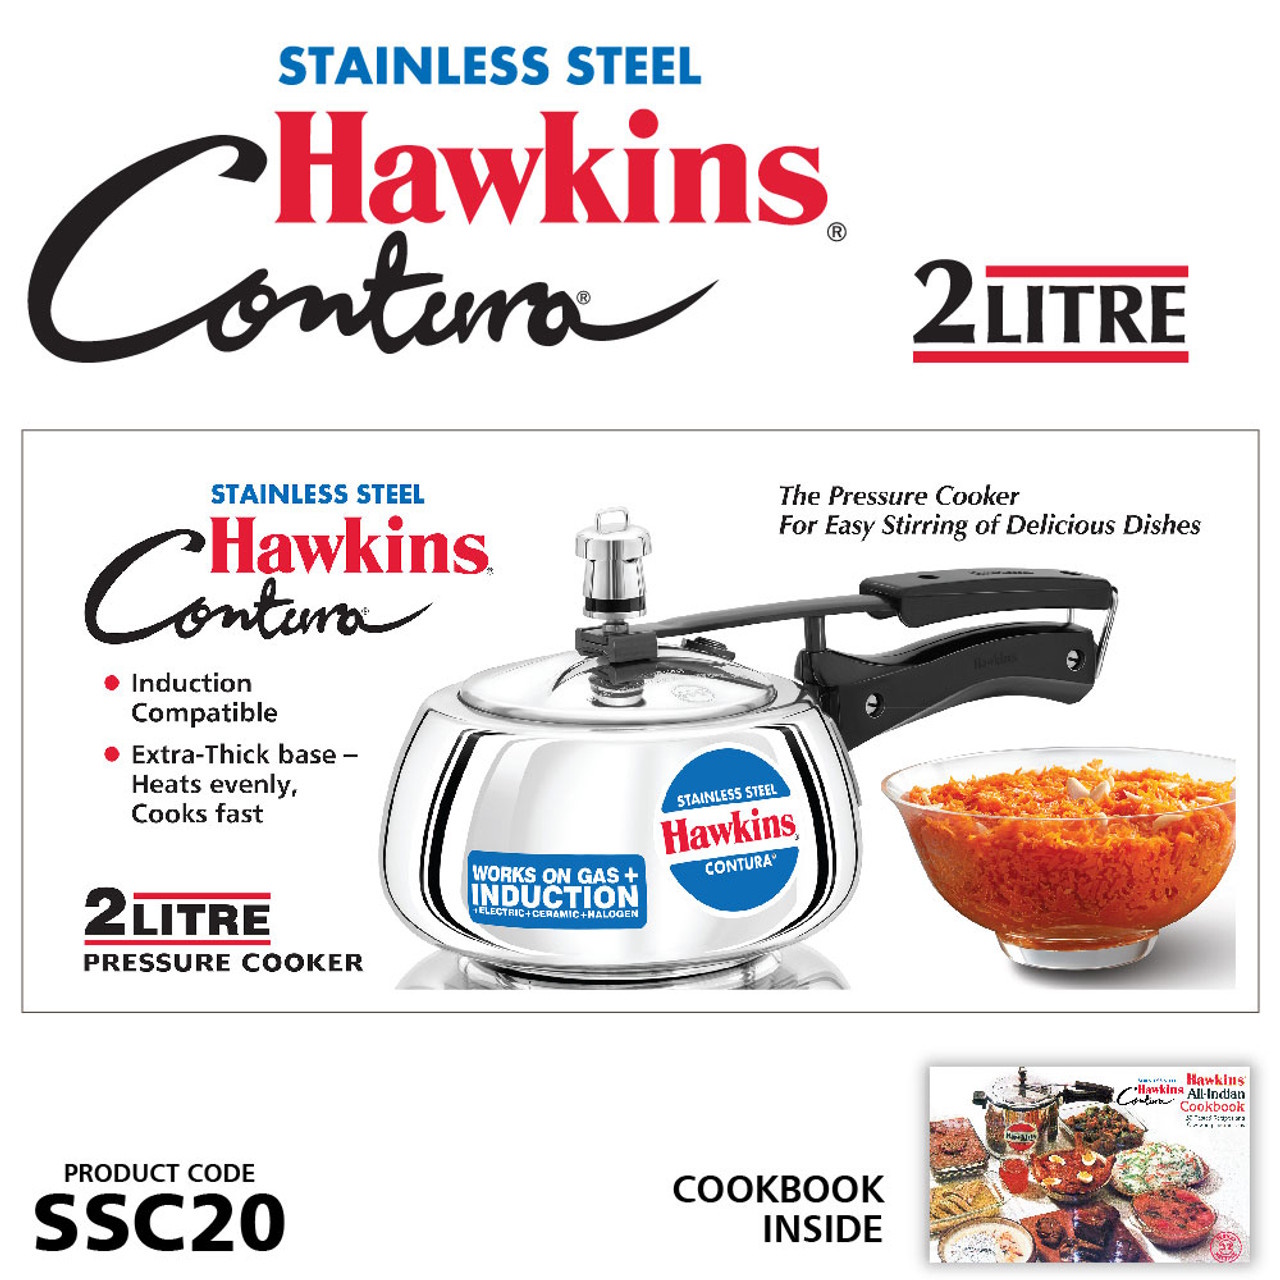 Hawkins Stainless Steel Contura 2 Litre Pressure Cooker - SSC20